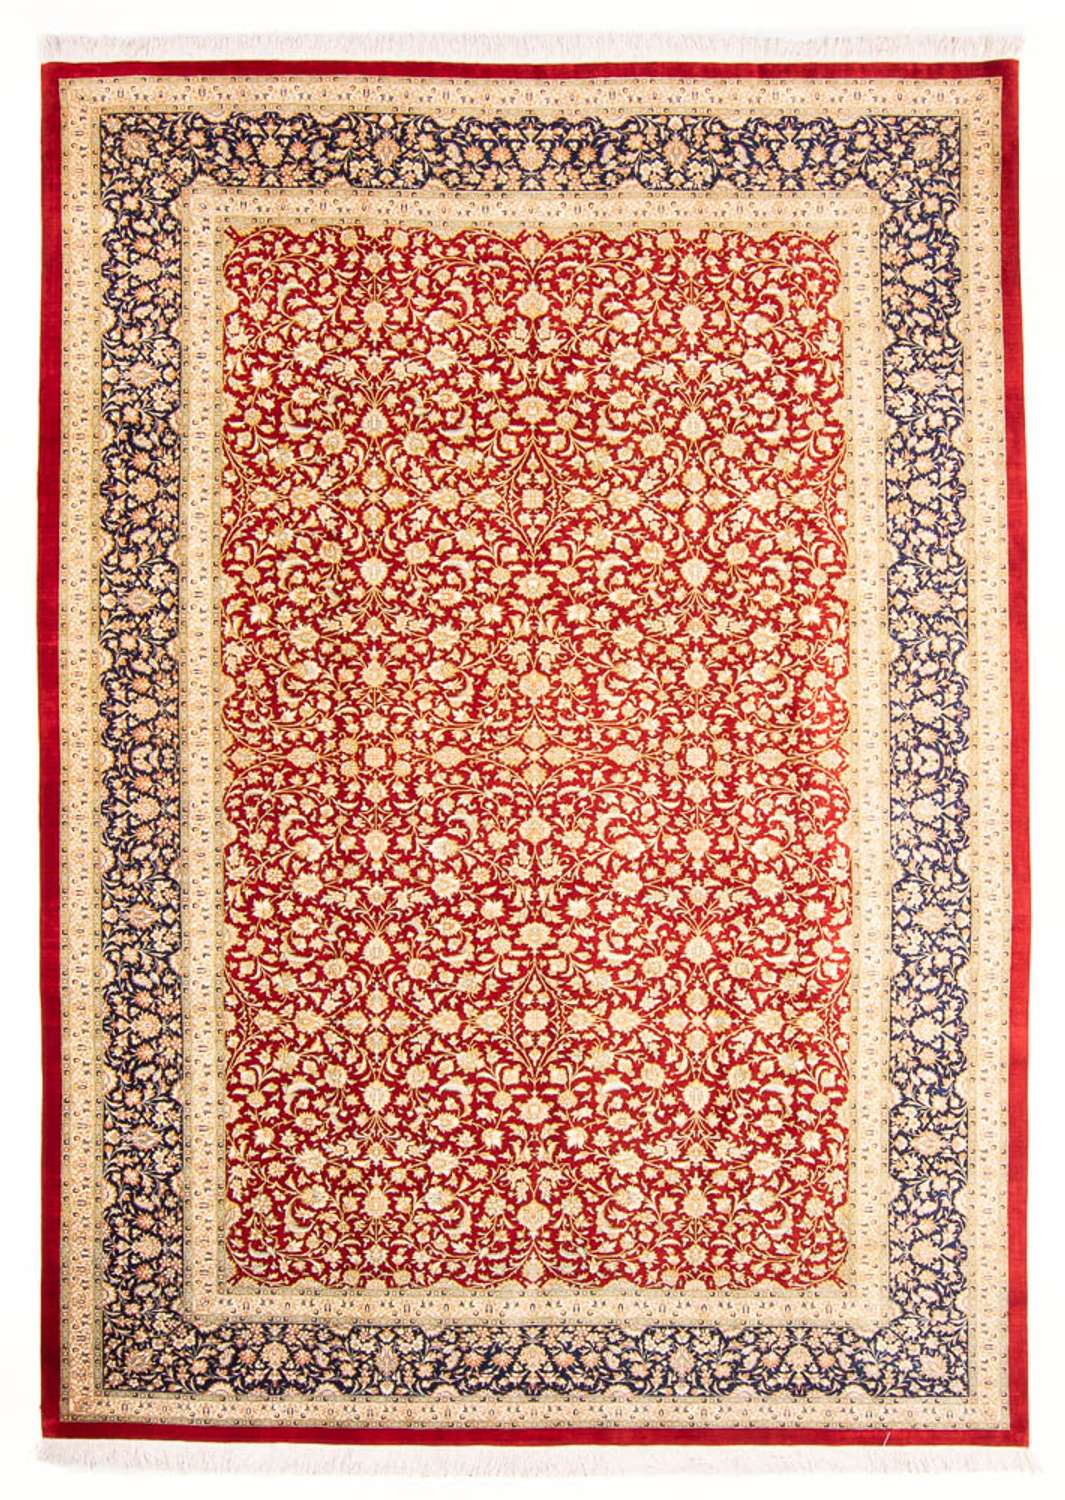 Tapis en soie - Ghom soie - Premium - 294 x 197 cm - rouge